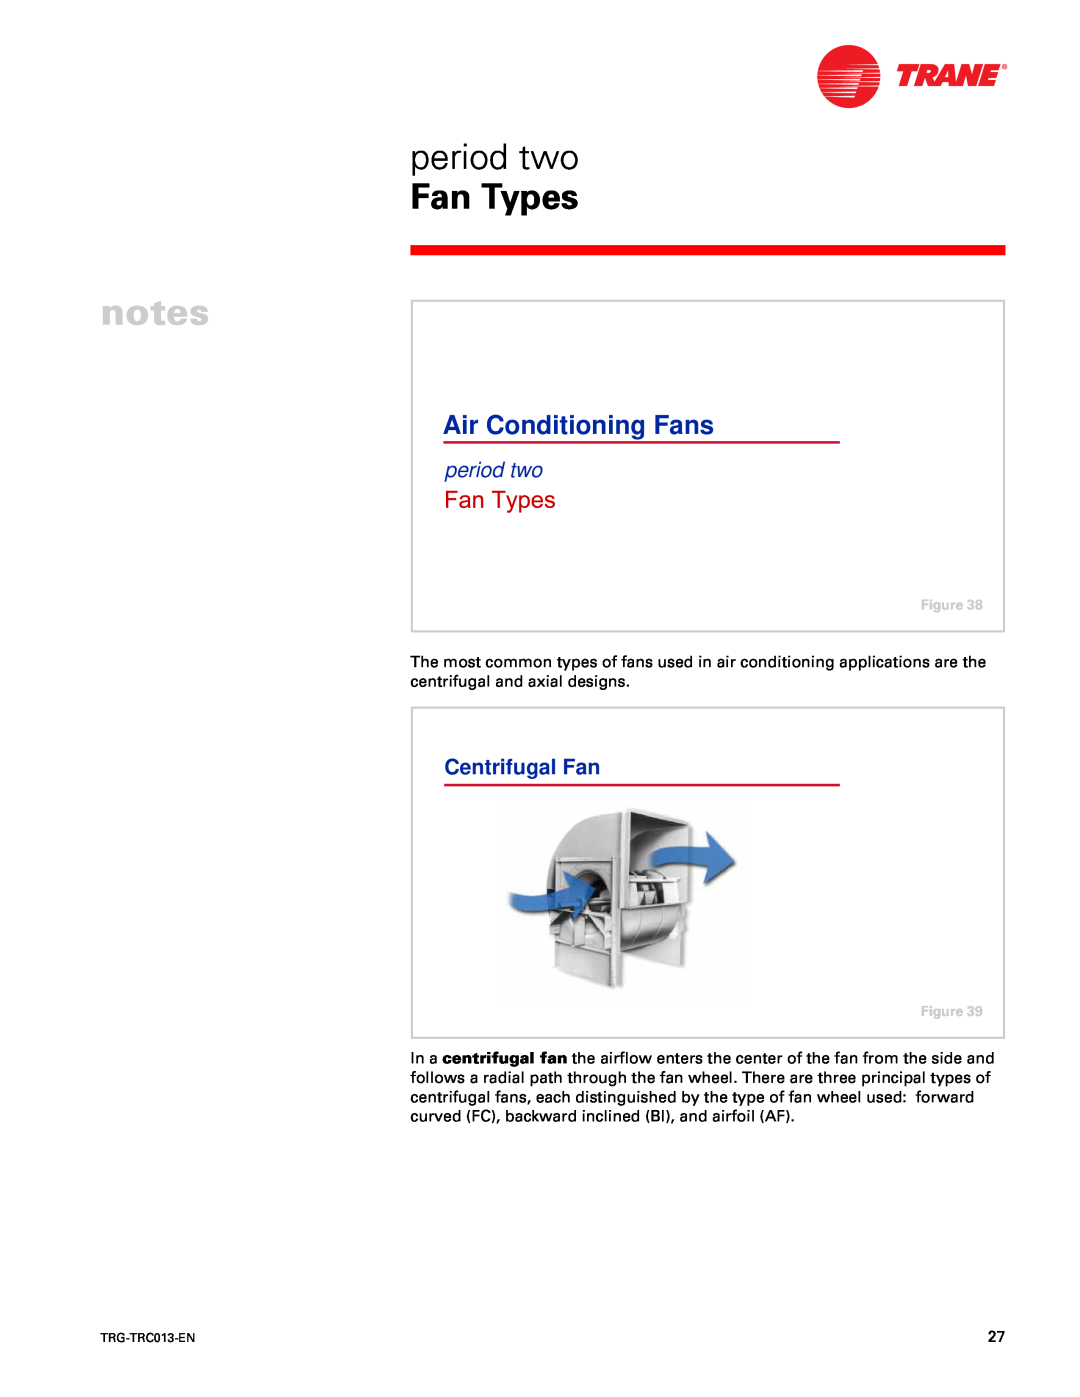 Trane TRG-TRC013-EN manual period two, Centrifugal Fan, Air Conditioning Fans, g FN, g FO 